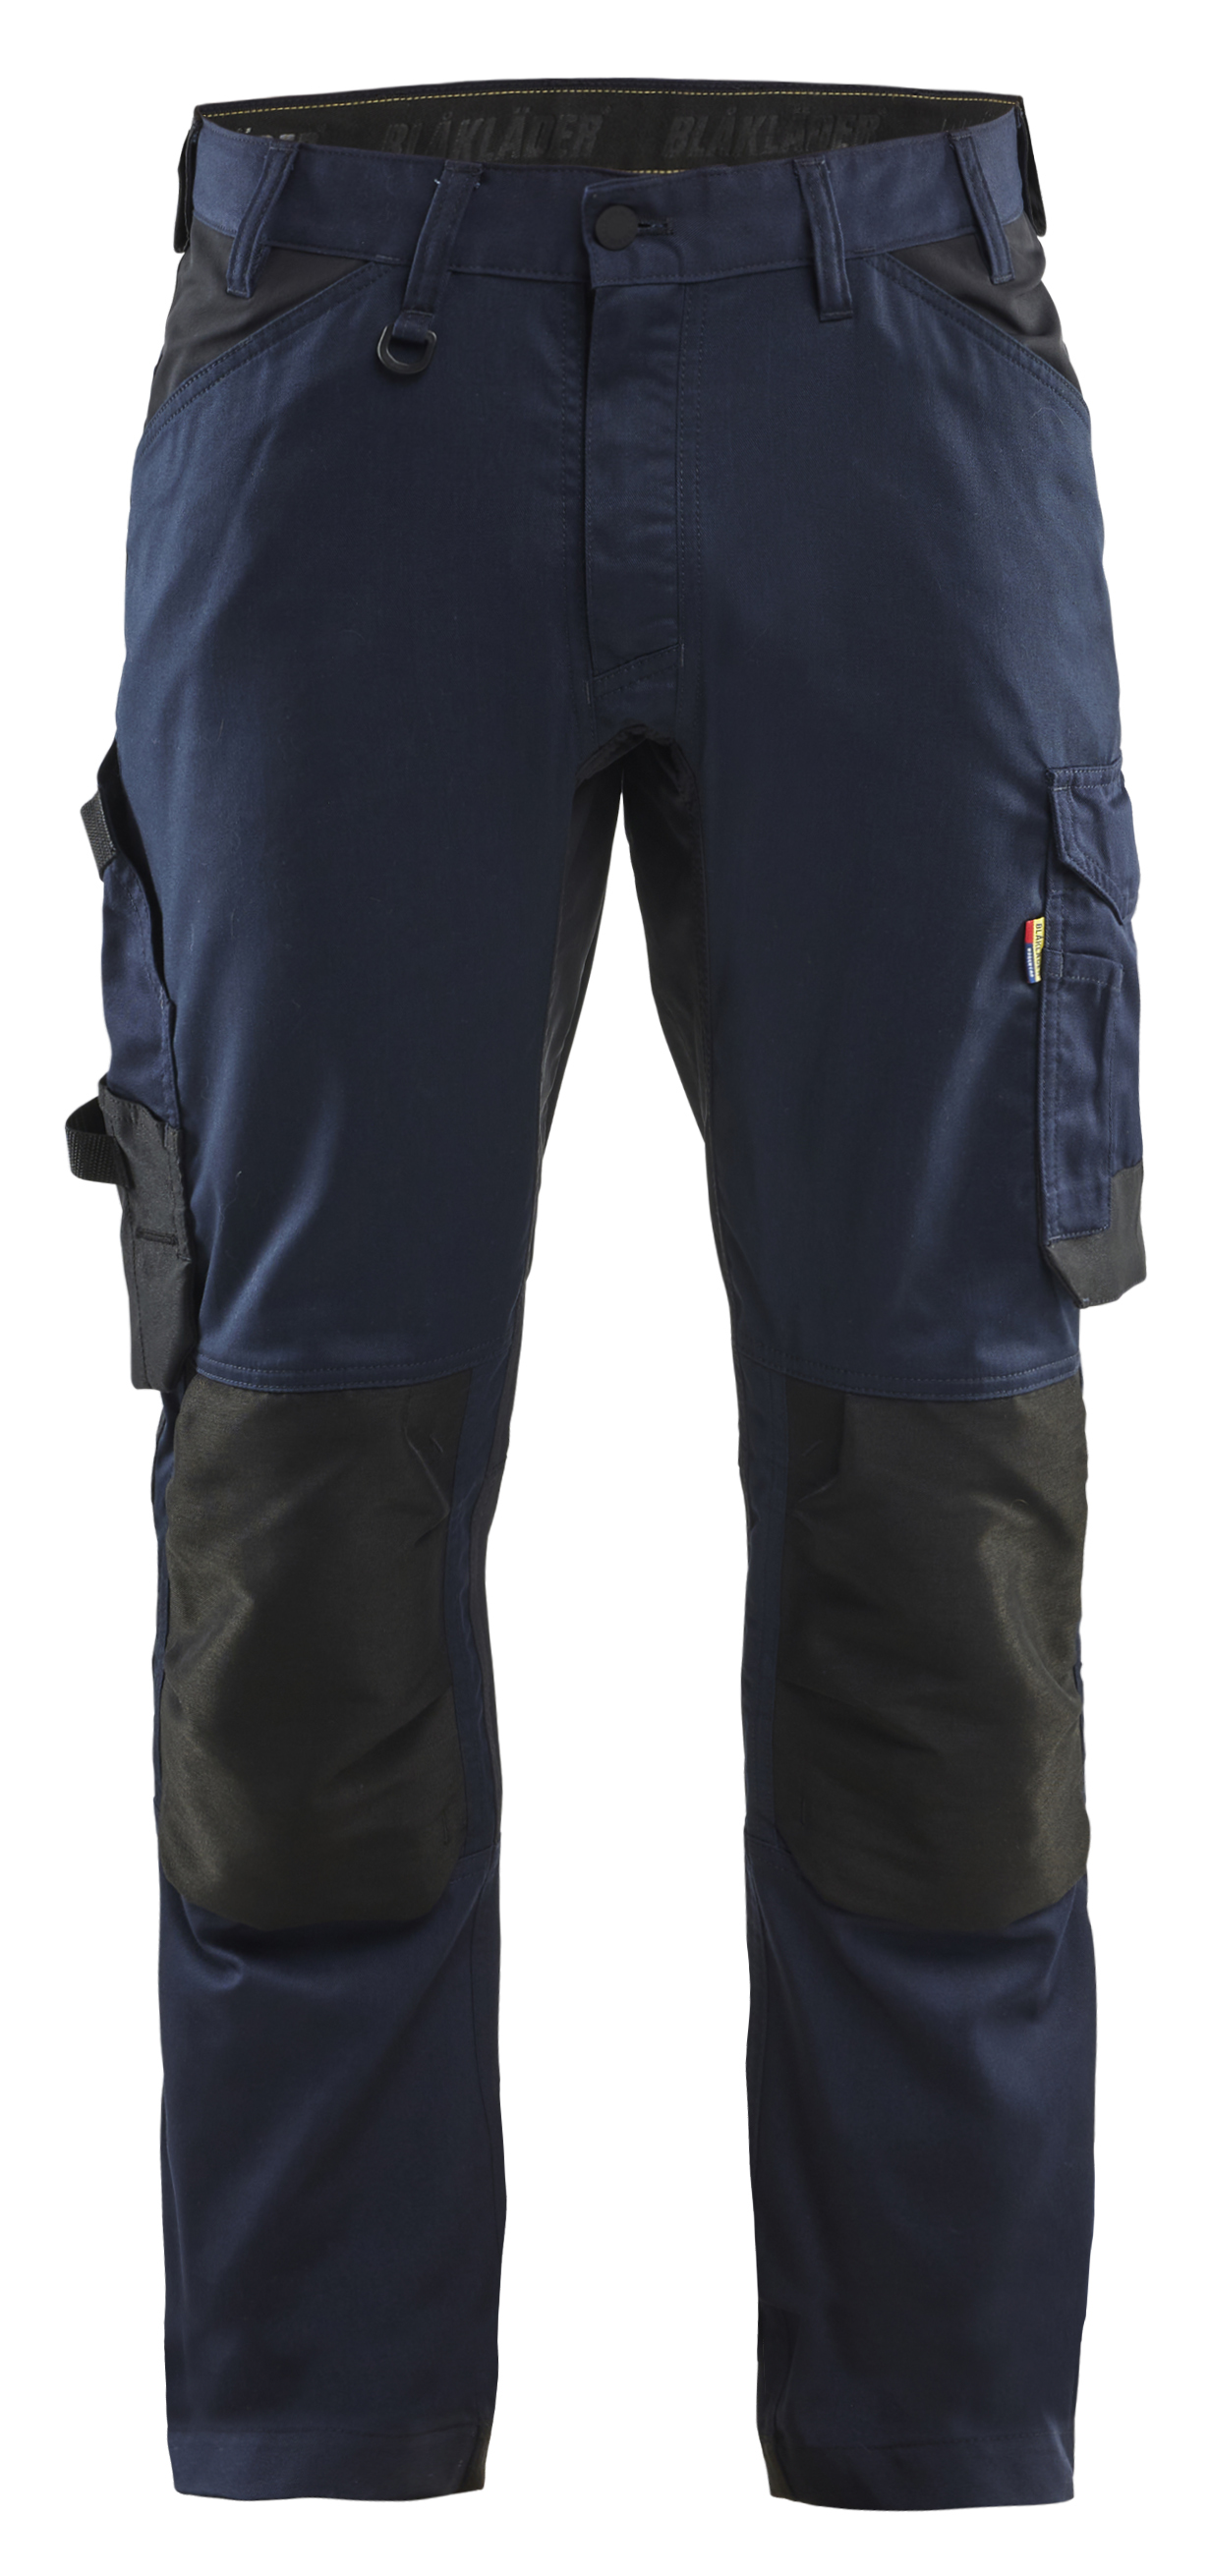 Pantalon de travail BLAKLADER bleu marine 1751 stretch 2D - 175118328600C